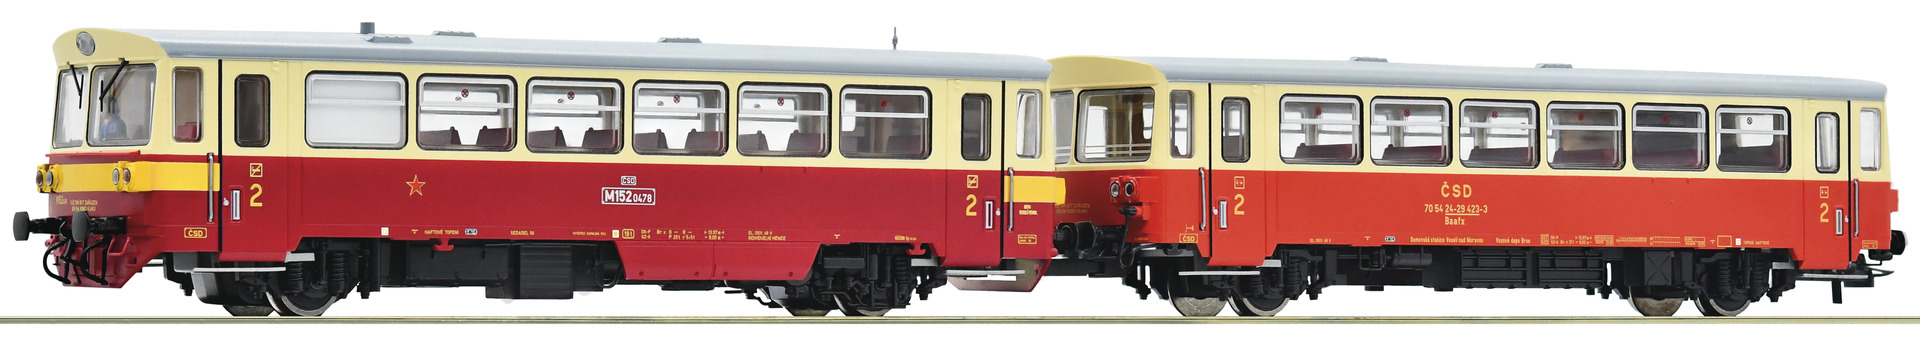 Roco 70375  Diesel railcar class M 152.0 with trailer, CSD (DCC/Sound)